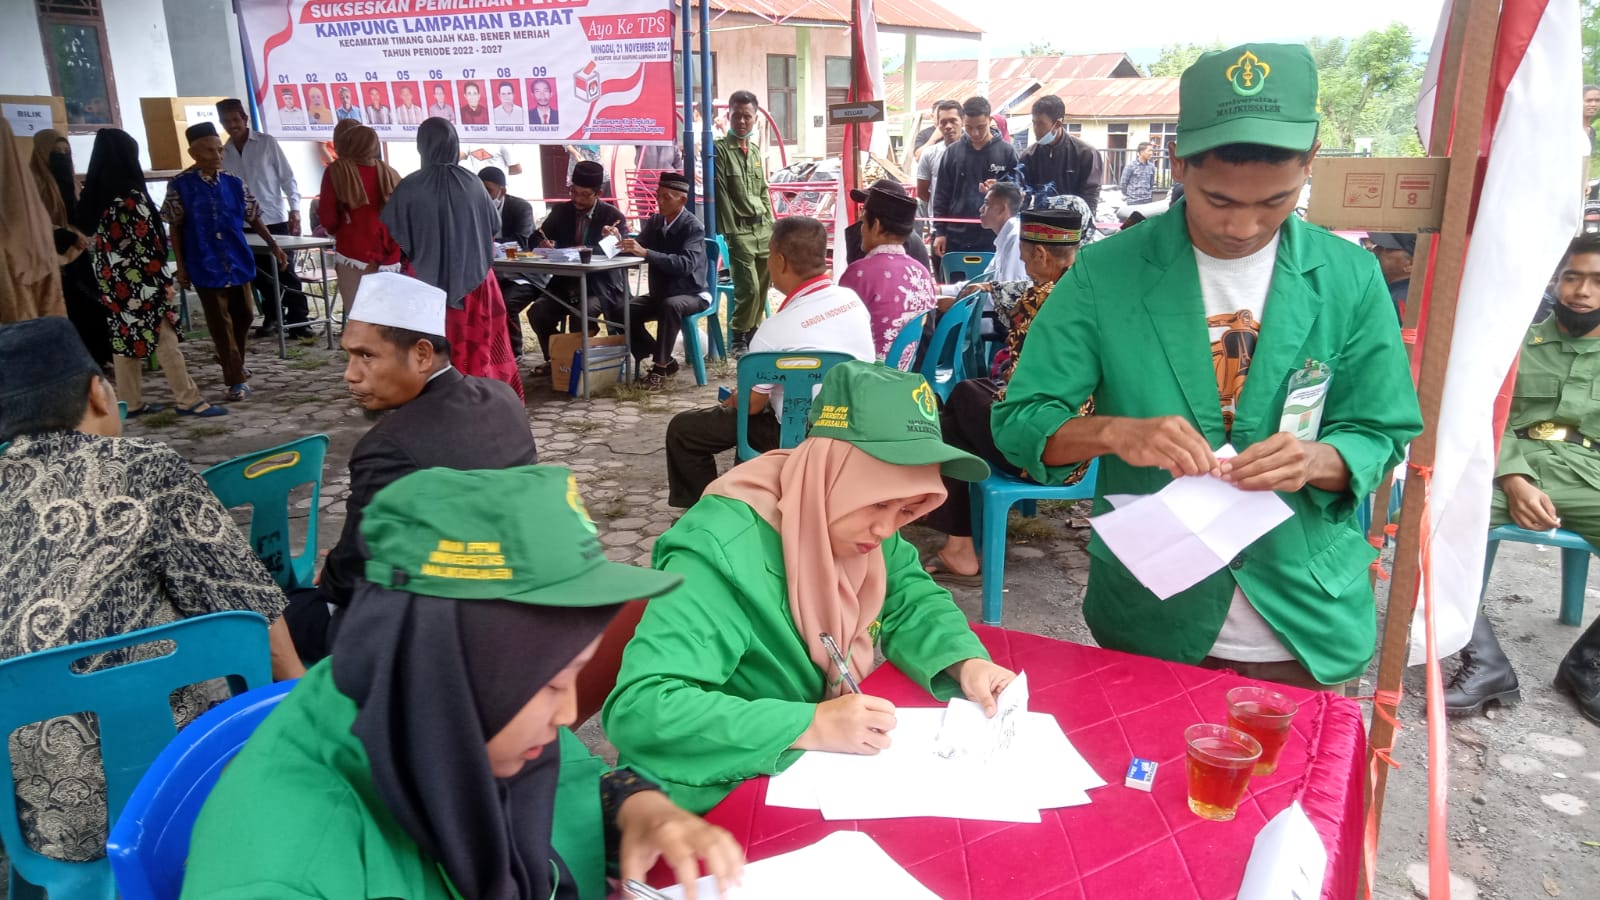 LensaHukum.co.id - IMG 20211122 WA0028 - Mahasiswa KKN PPM 040 Kampung Lampahan Barat Ikut Berpartisipasi Dalam Pemilihan Patue